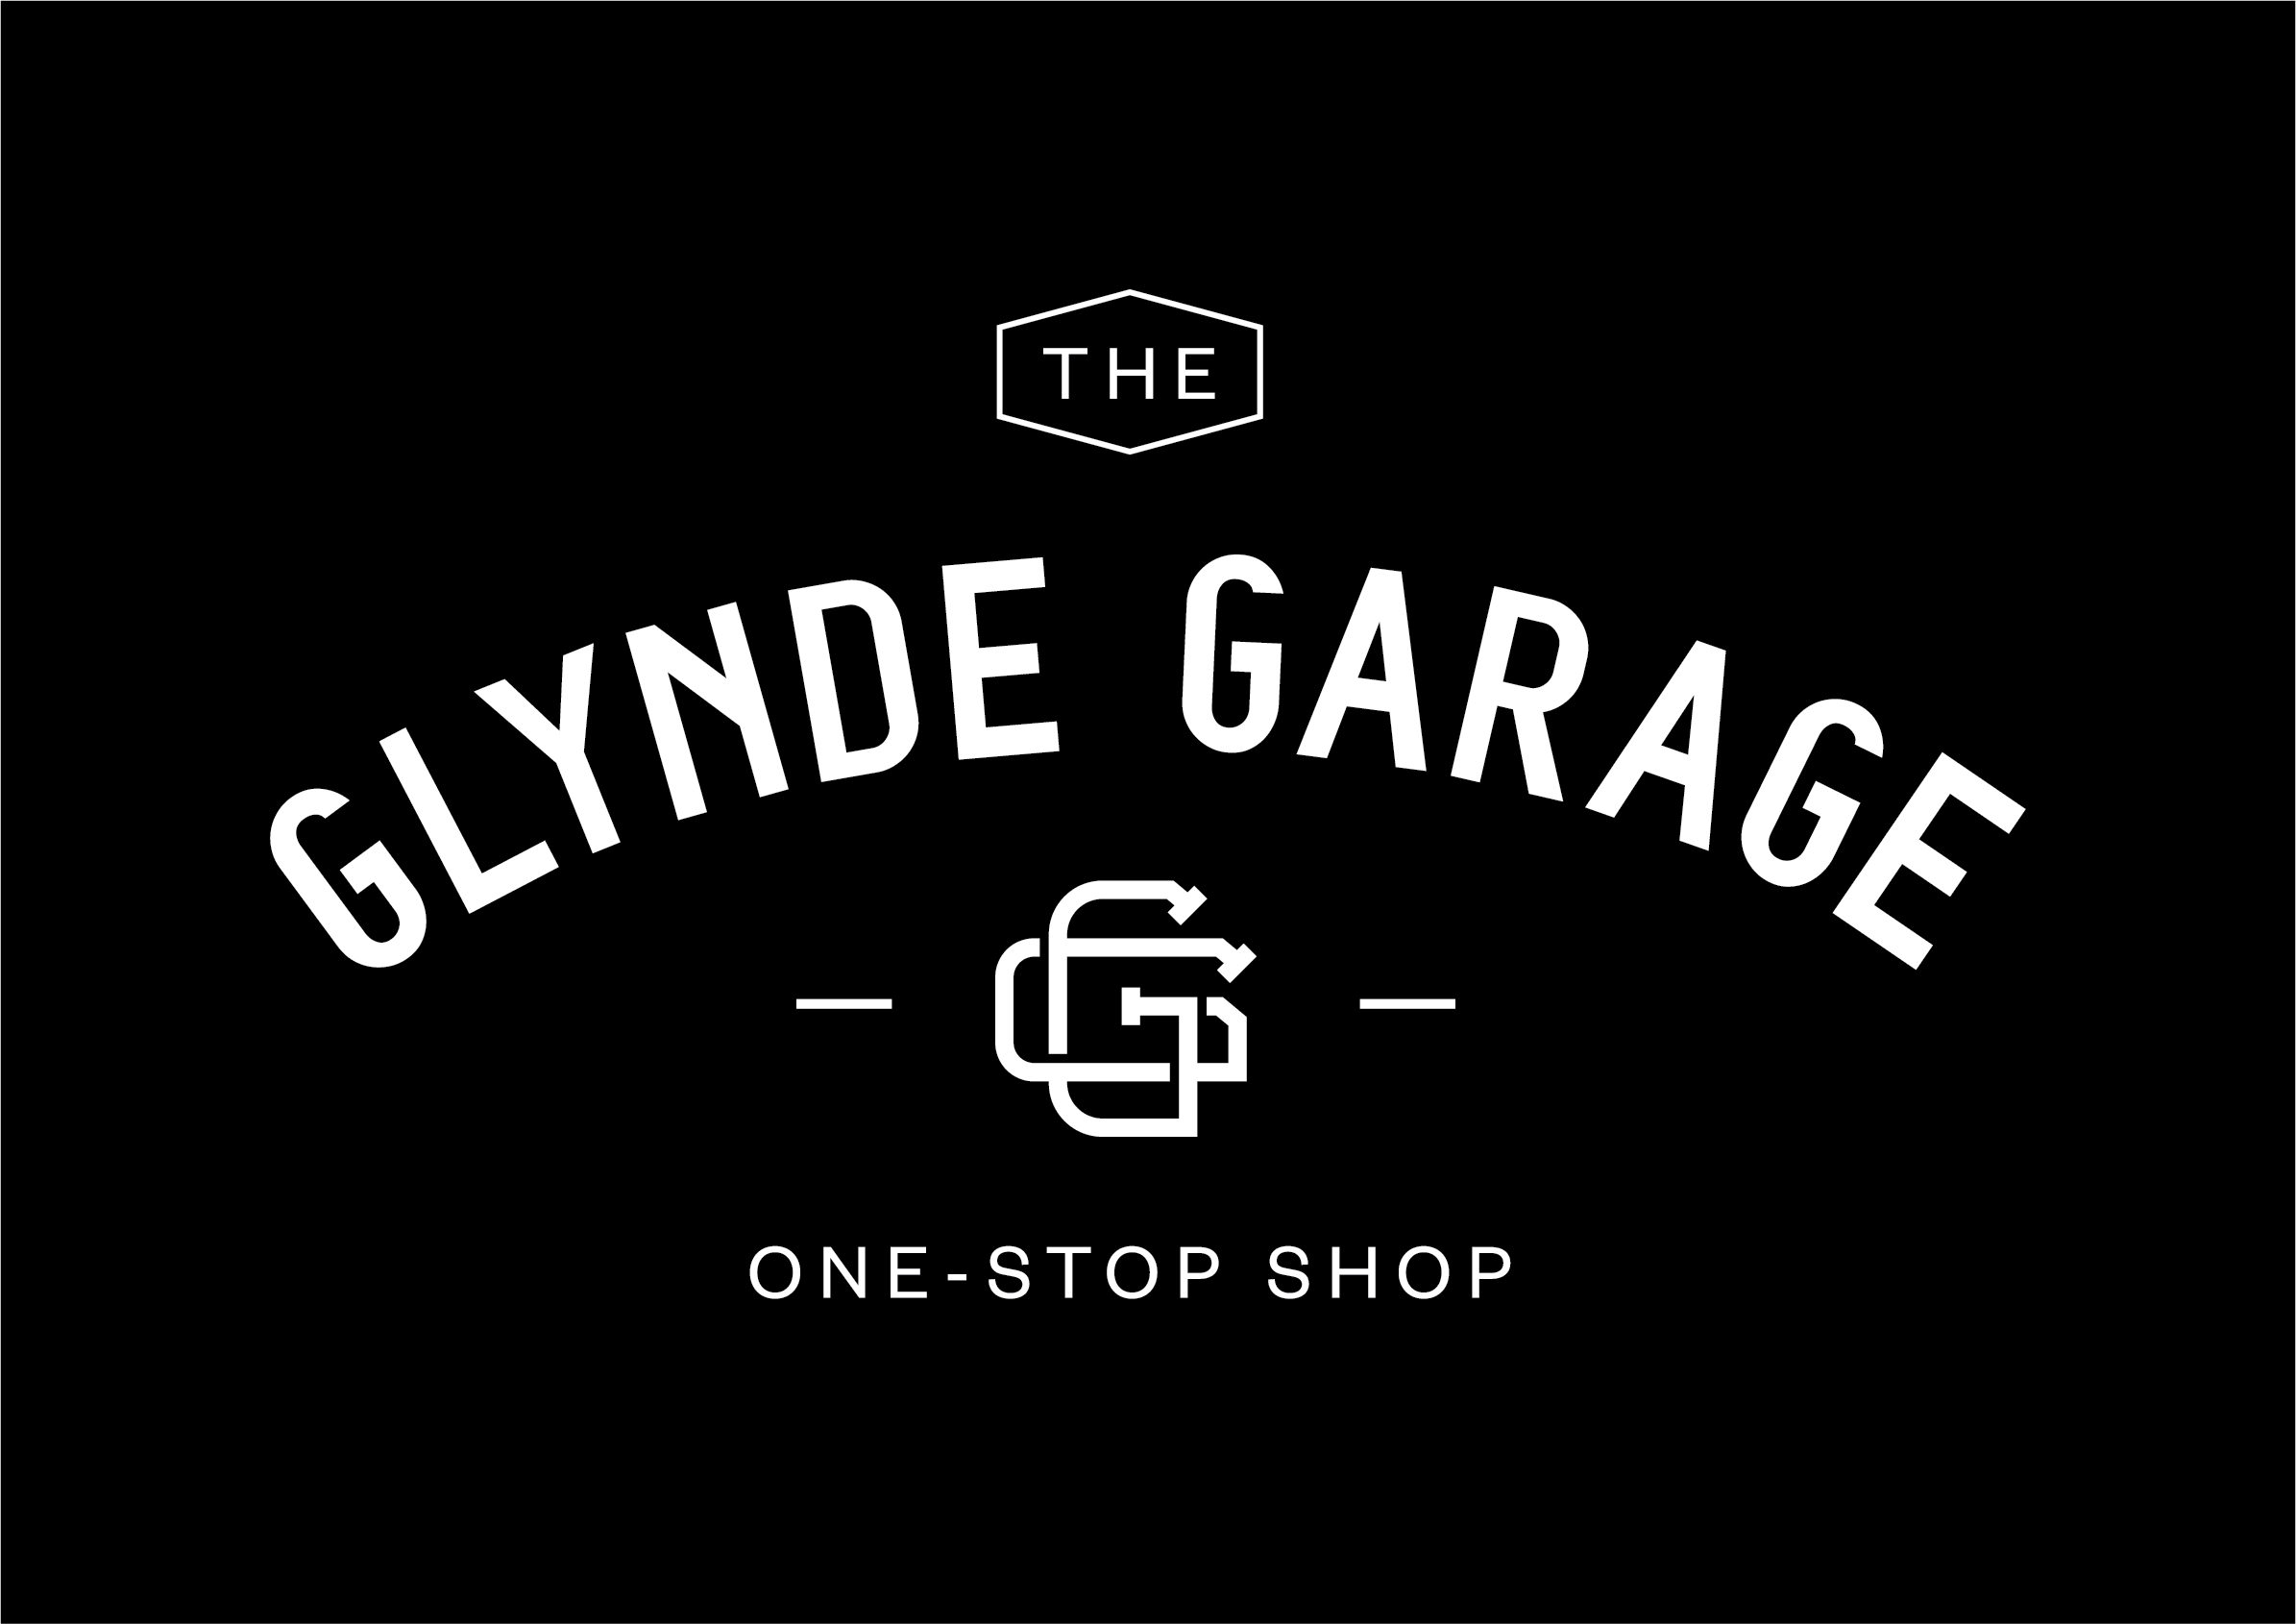 The Glynde Garage